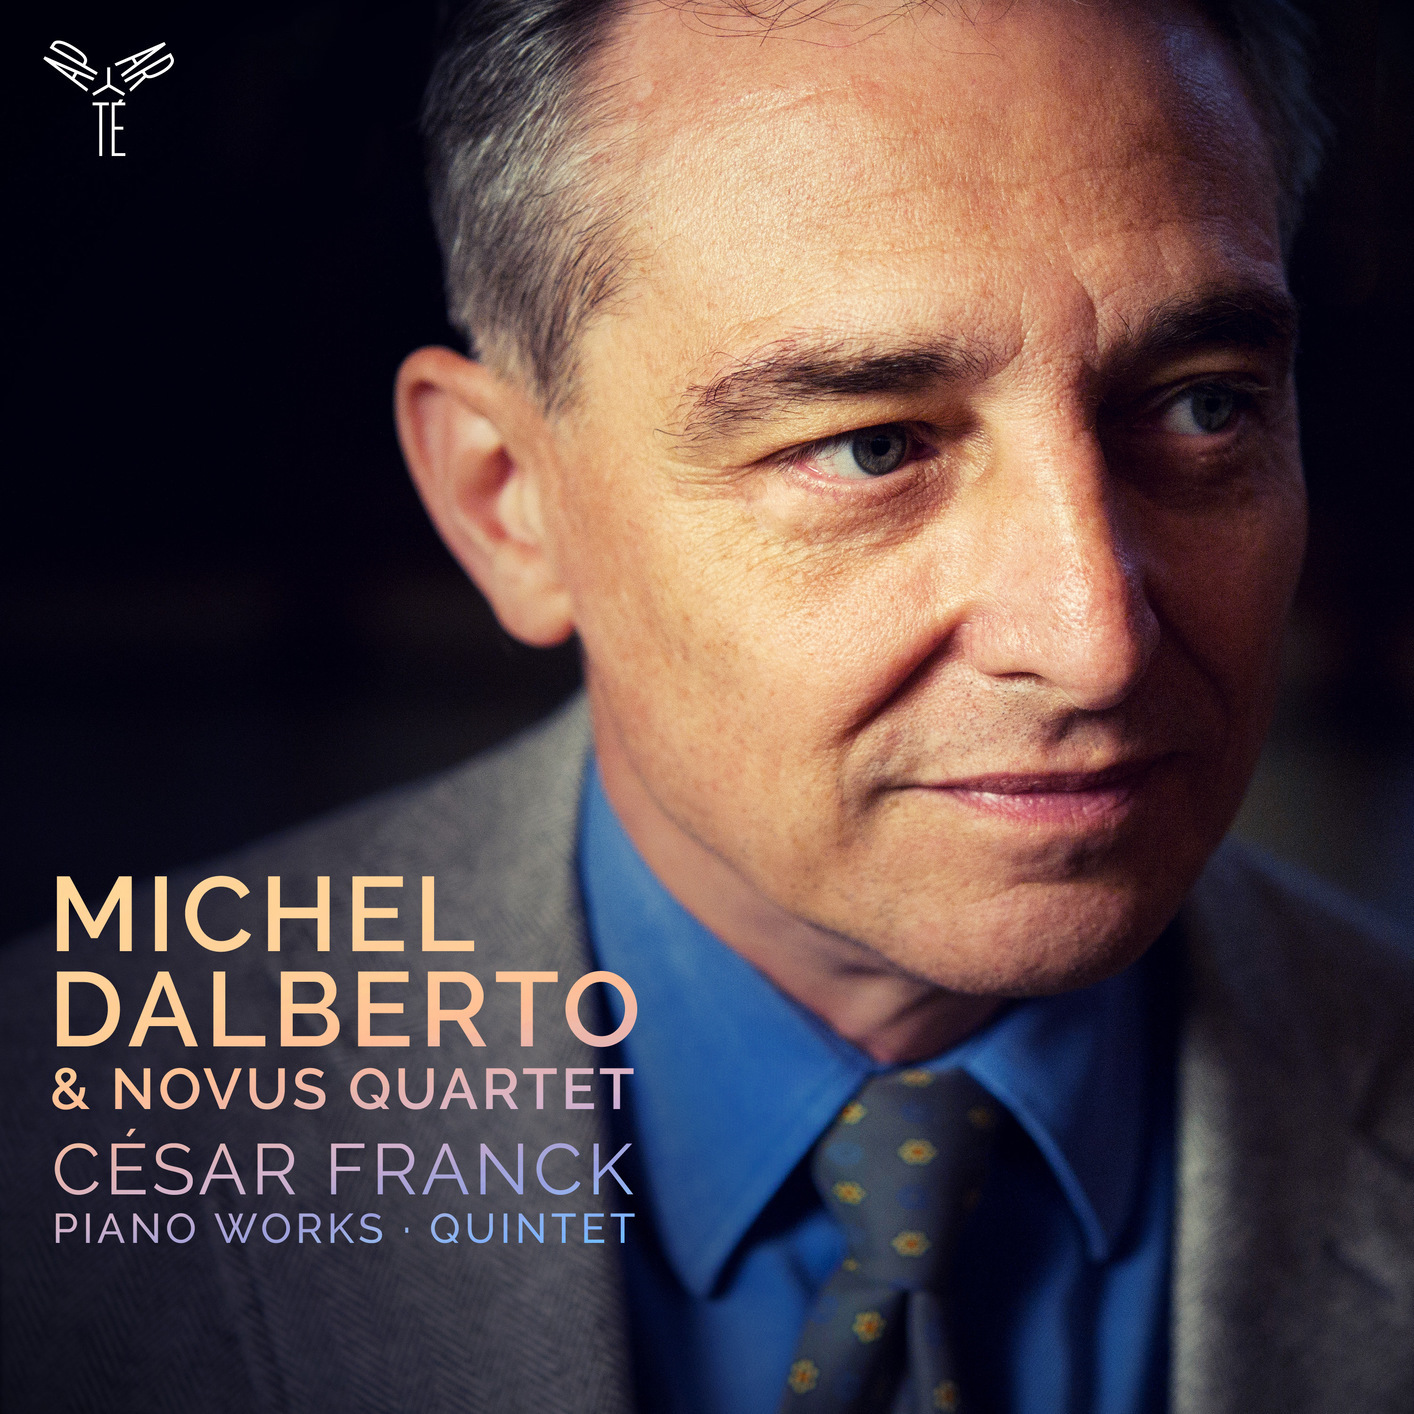 Novus Quartet & Michel Dalberto - Cesar Franck: Piano Works & Quintet (2019) [FLAC 24bit/96kHz]